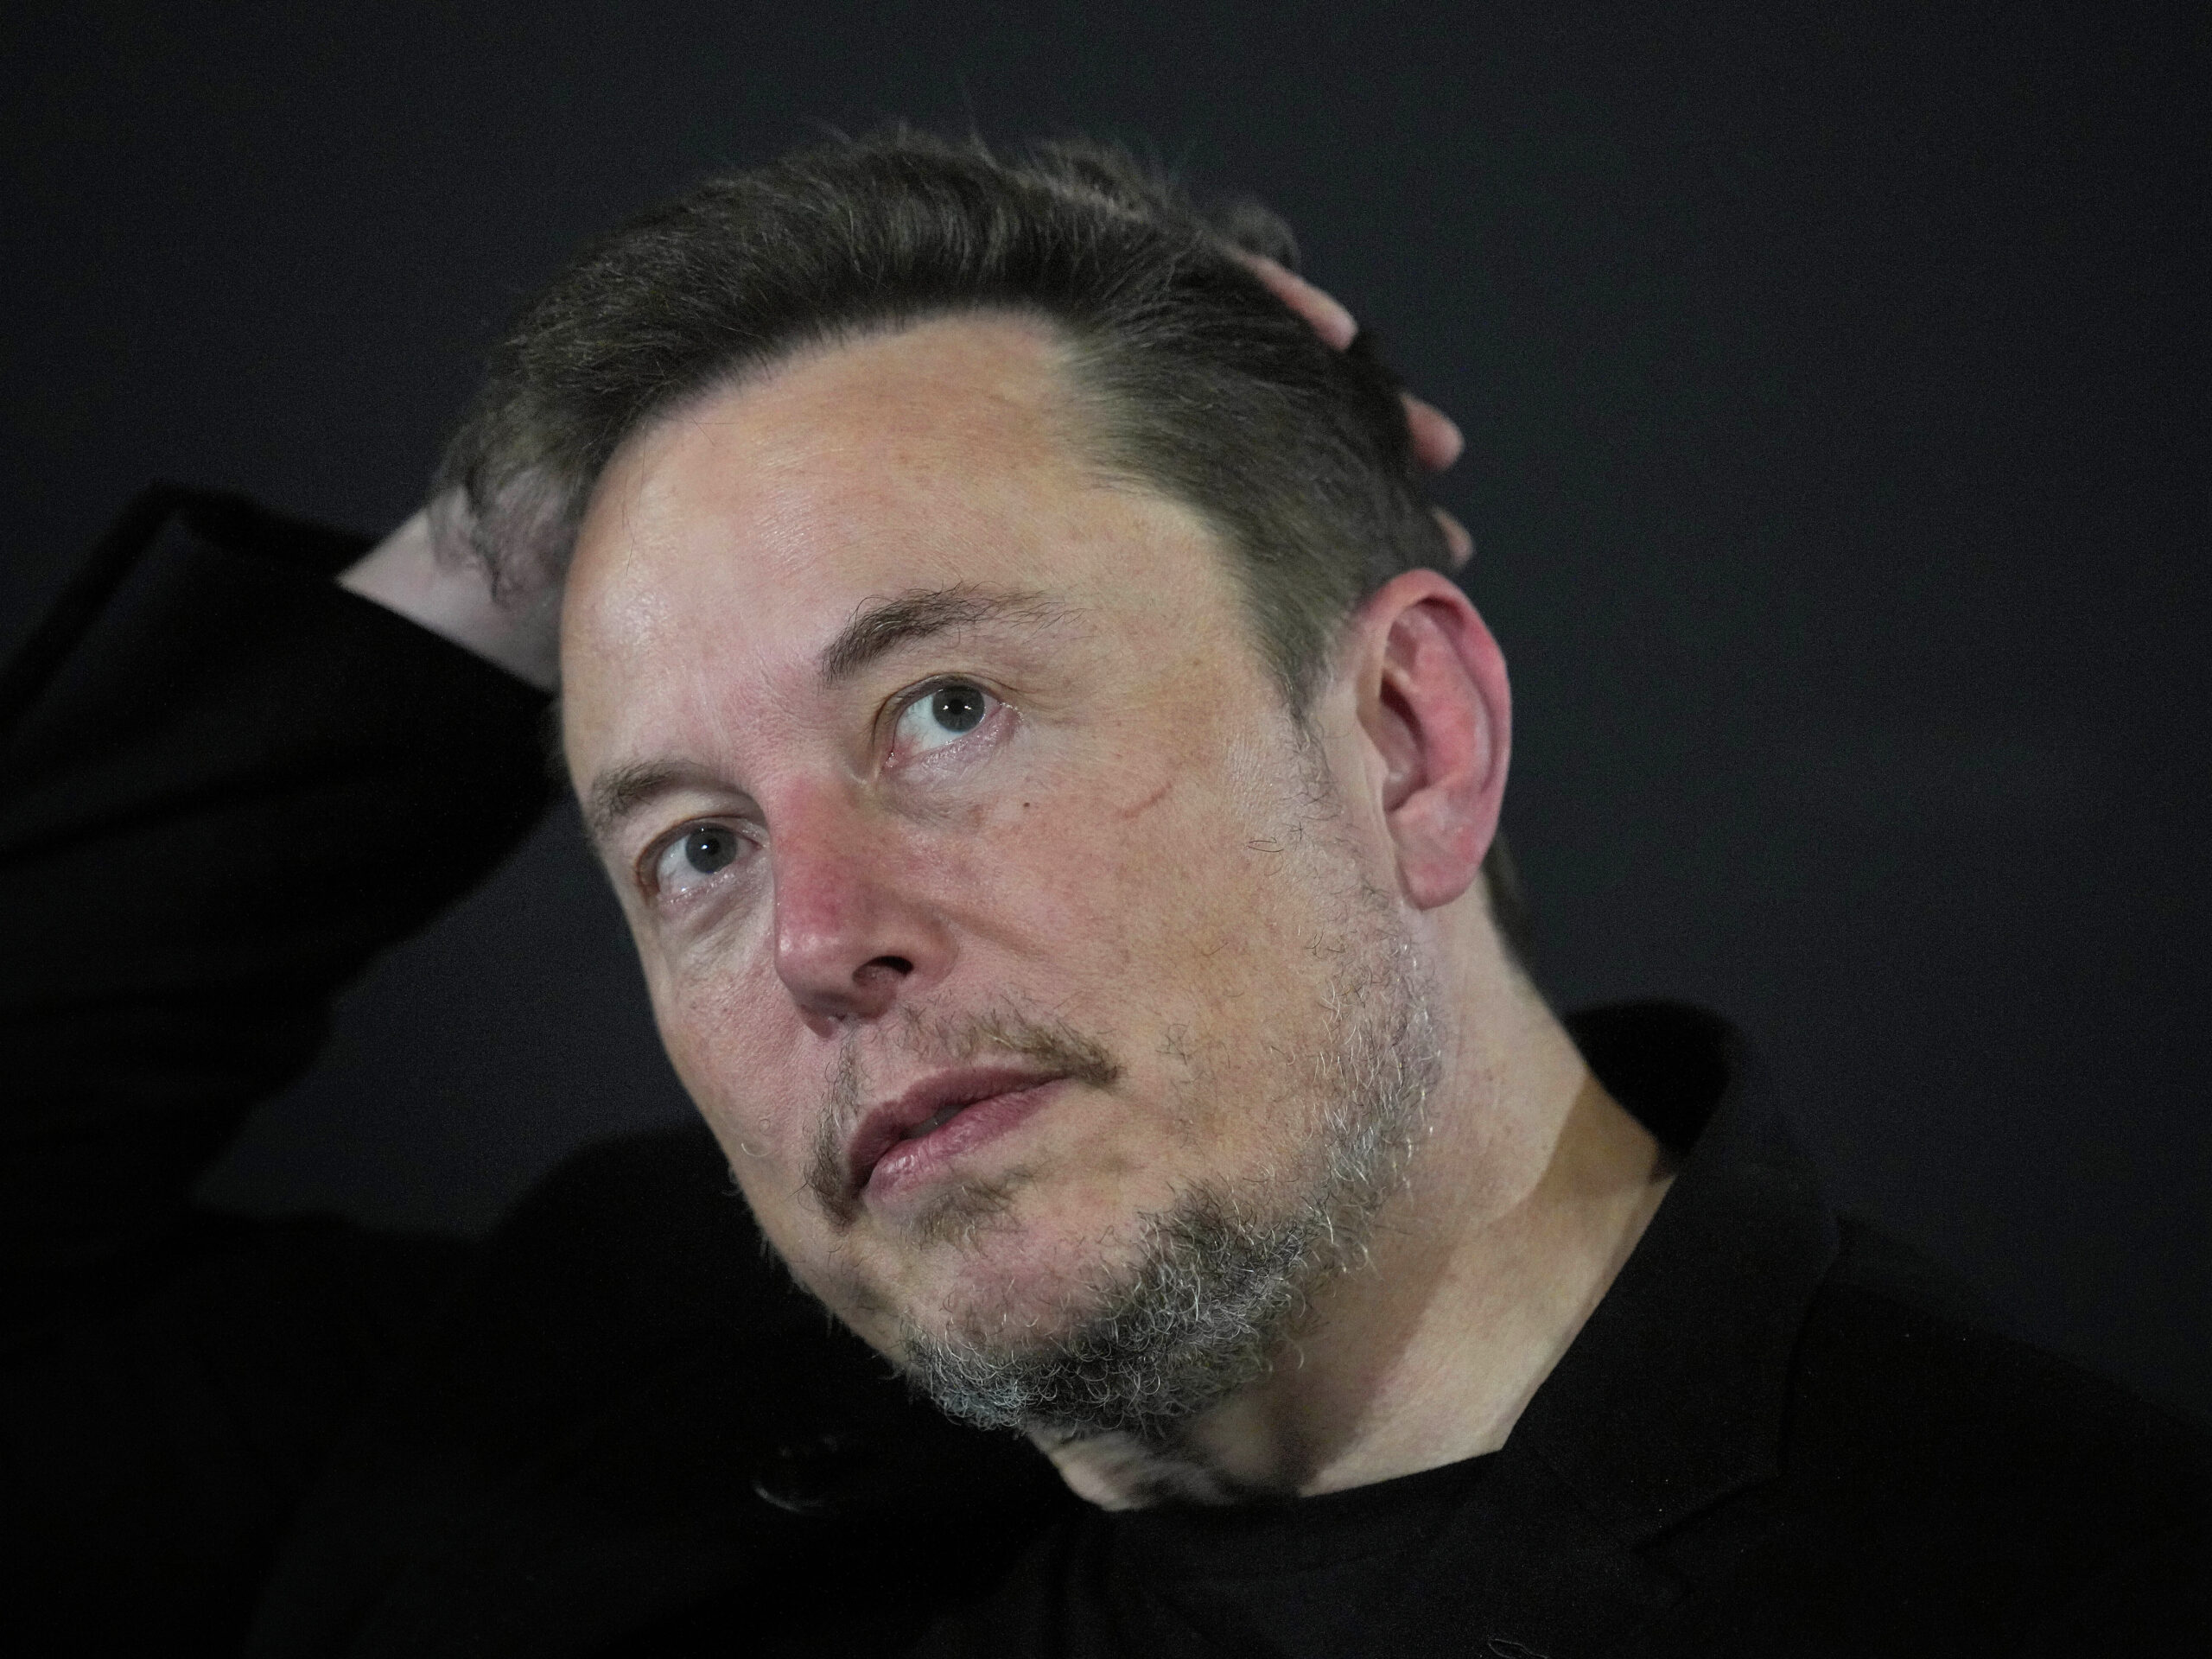 Brazil’s Supreme Court judge opens an investigation of Elon Musk over misinformation